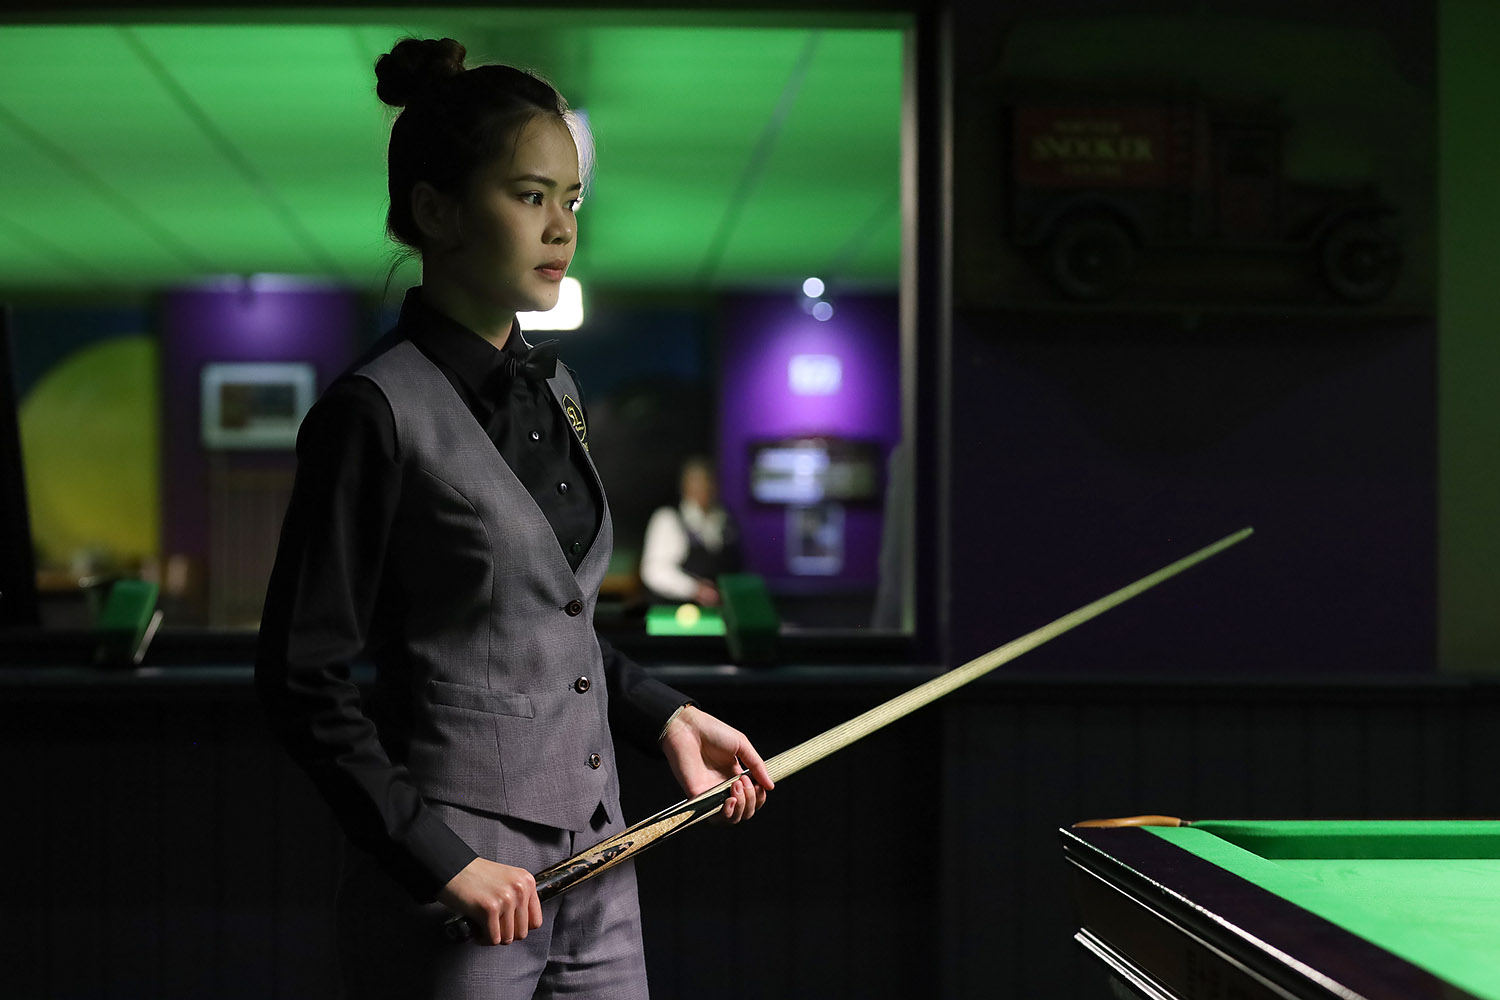 Taom UK Women's Snooker Championship 2023  Tournament Information - World  Women's Snooker